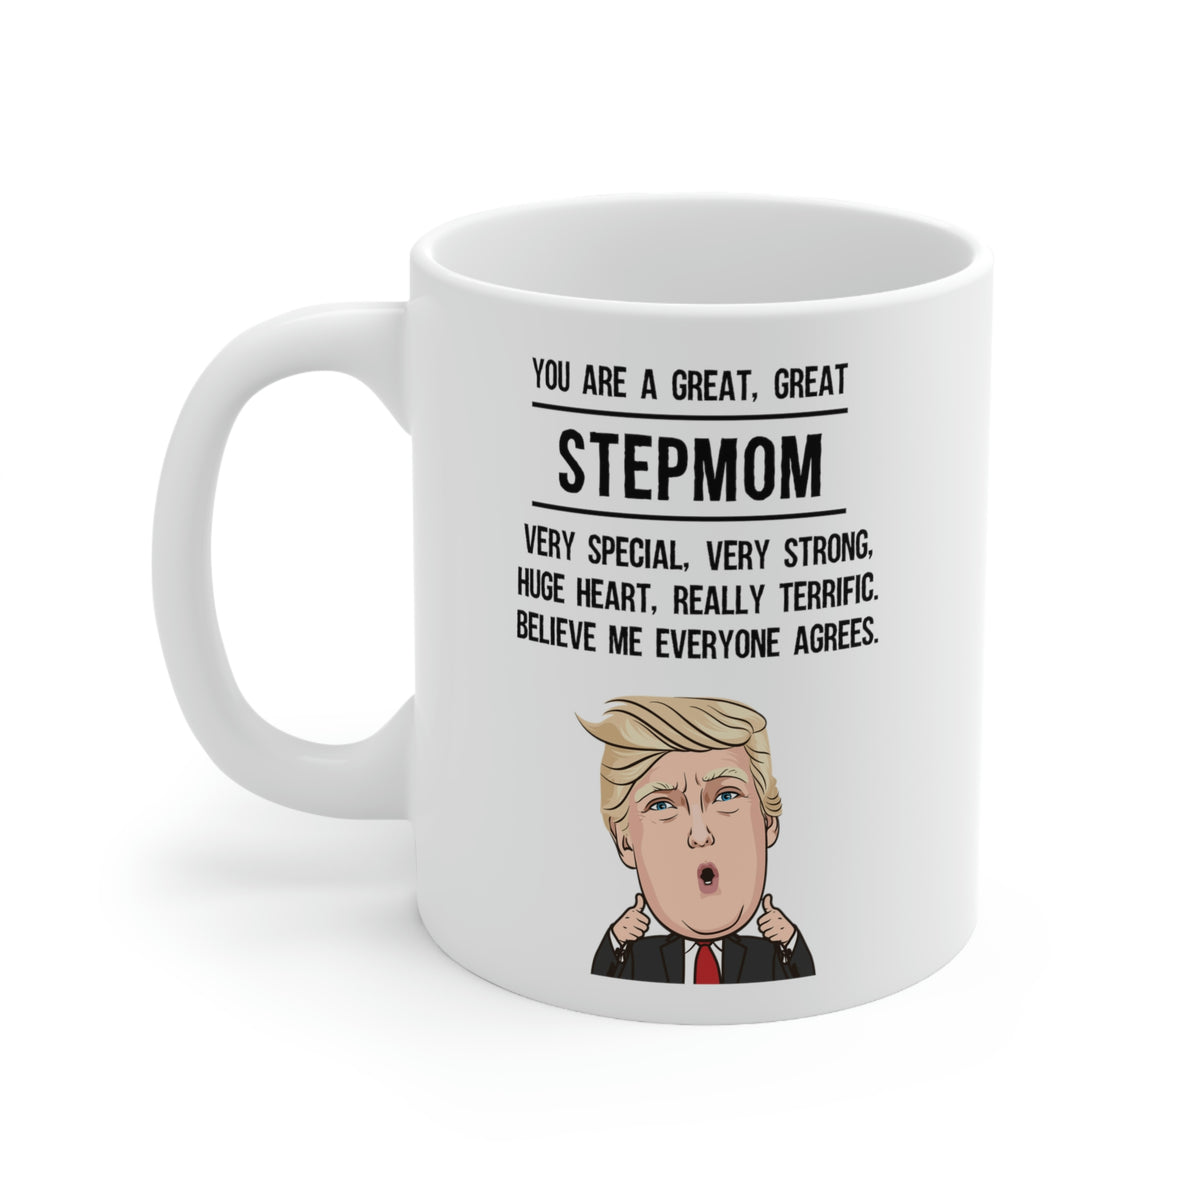 Trump Stepmom 11oz Coffee Mug - Funny Novelty Mother Gifts - Sarcasm Birthday Christmas Gift For Family